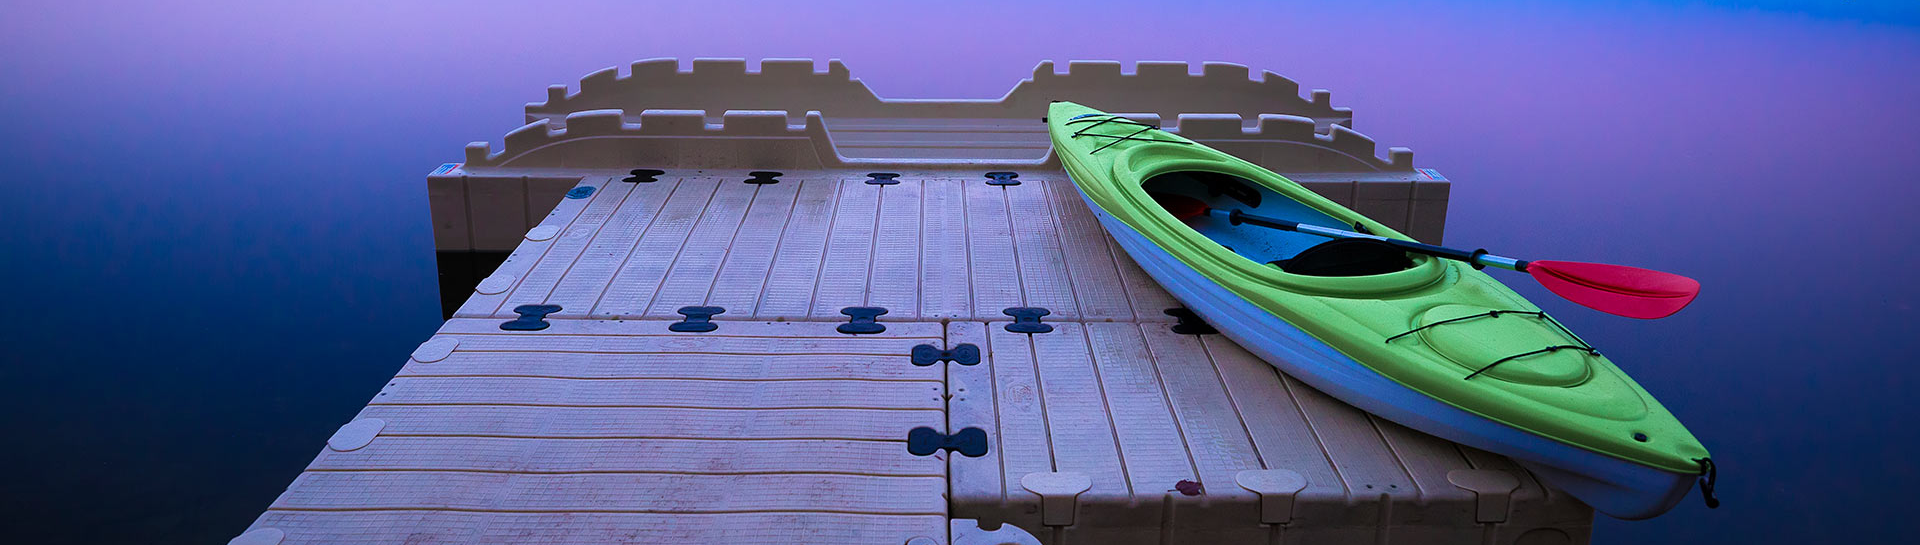 ez-kayak-launch-purple